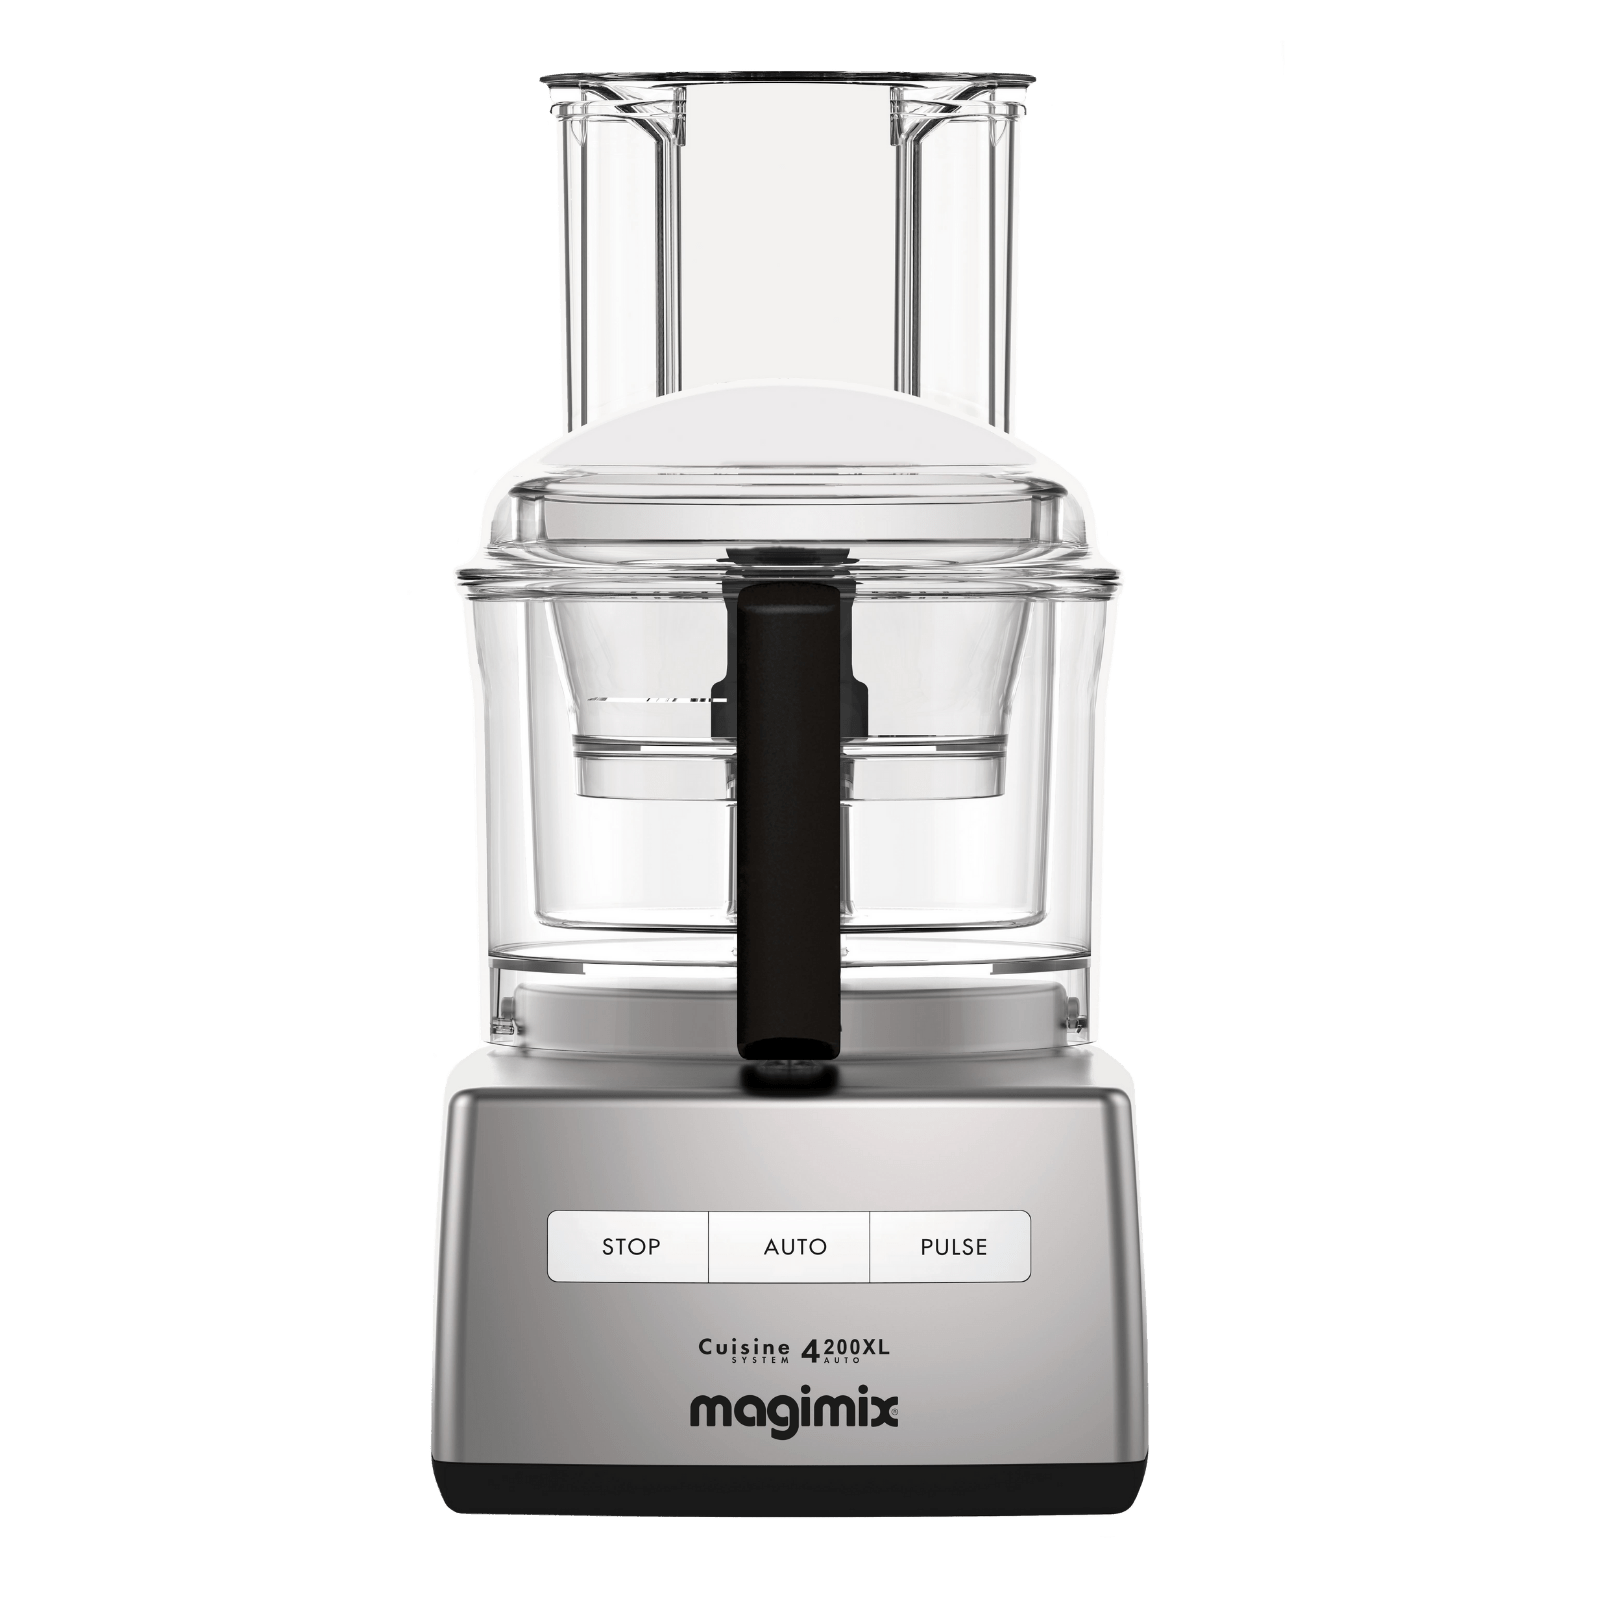 Magimix Compact 4200 XL Chrome 950 Watt Food Processor with Recipe Book